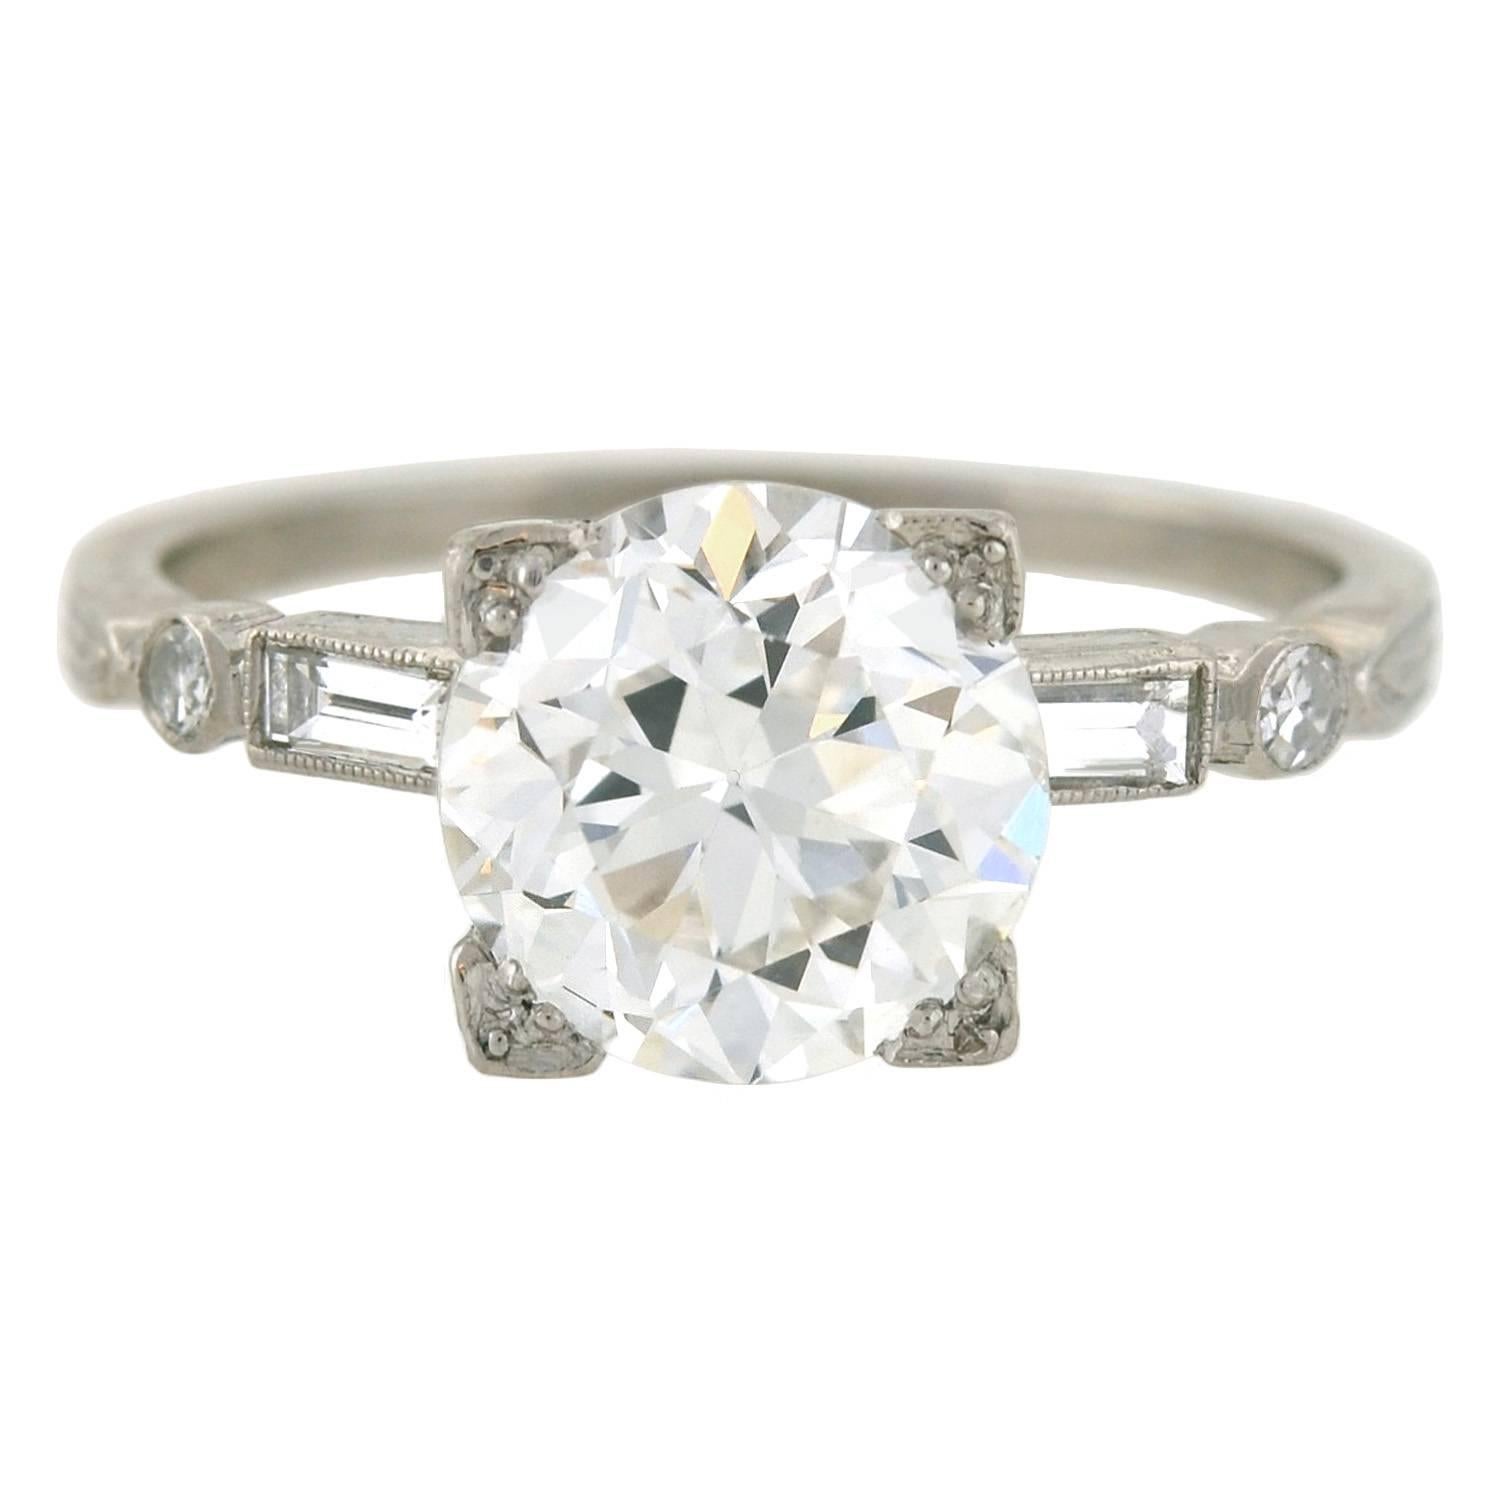 Late Art Deco GIA Certified 2.19 Carat Diamond Engagement Ring